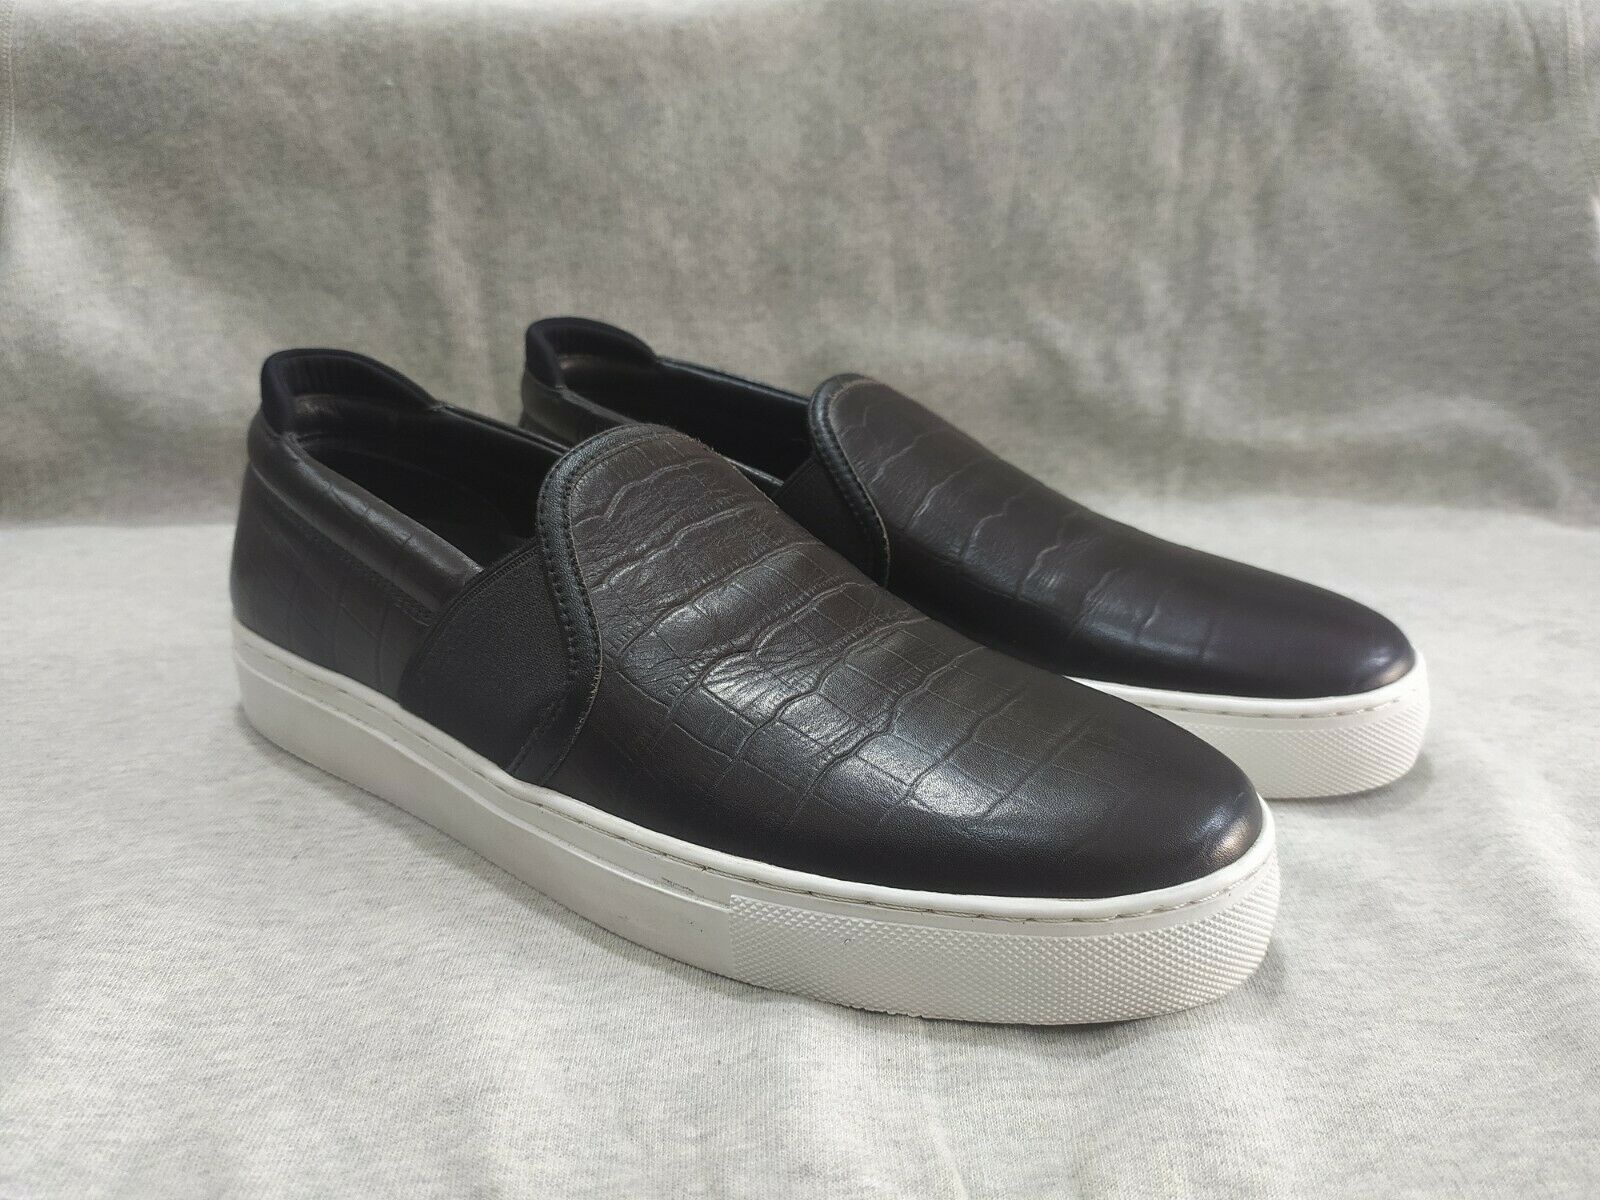 Hugo Boss Men's Leather Slip on Sneakers FREE WORLDWIDE SHIPPING - $128.70